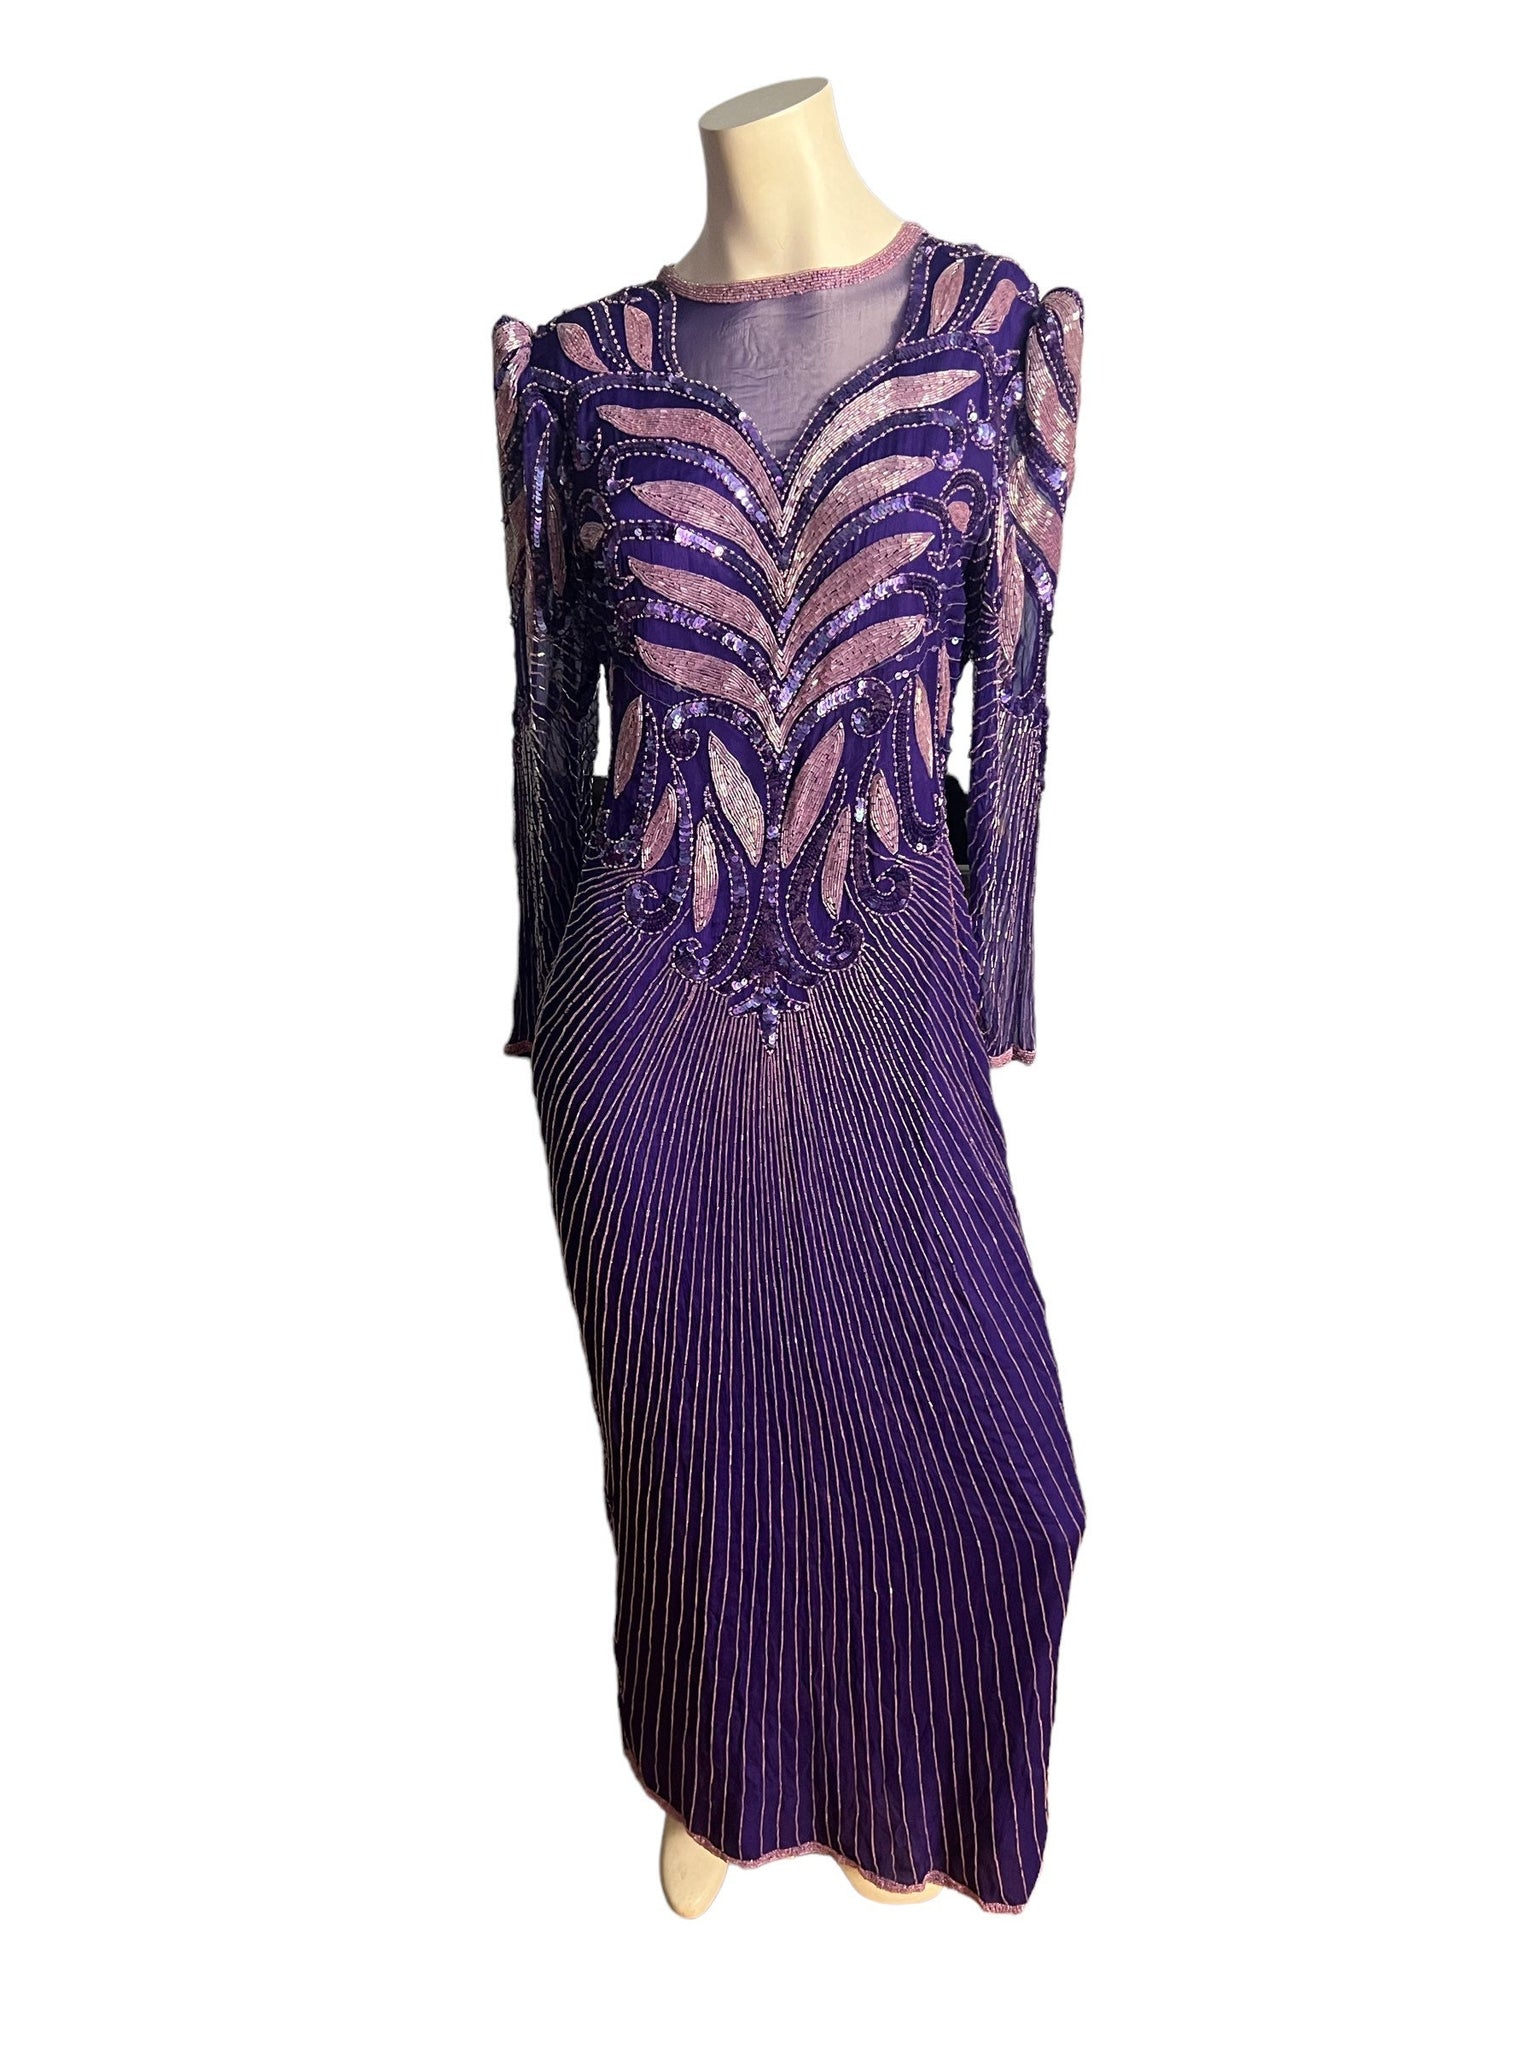 Vintage 80's purple bead & sequin dress Scala L